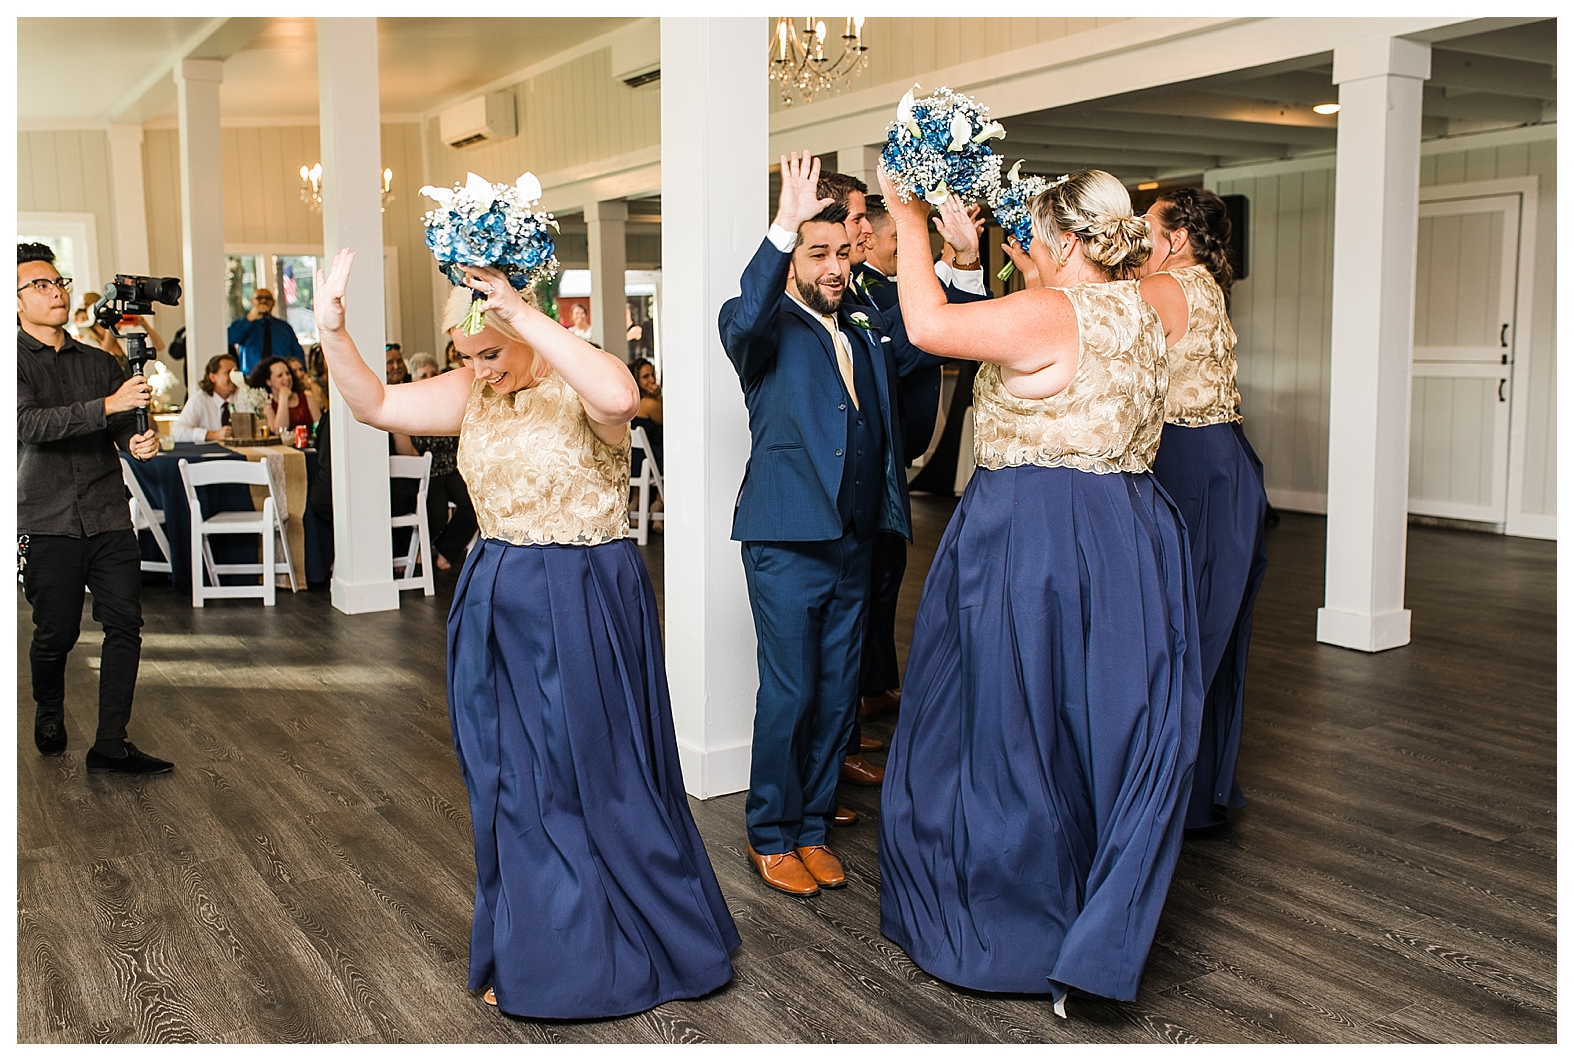 Wedding Party Dancing - Sara and Chad - Tampa Wedding Photographer